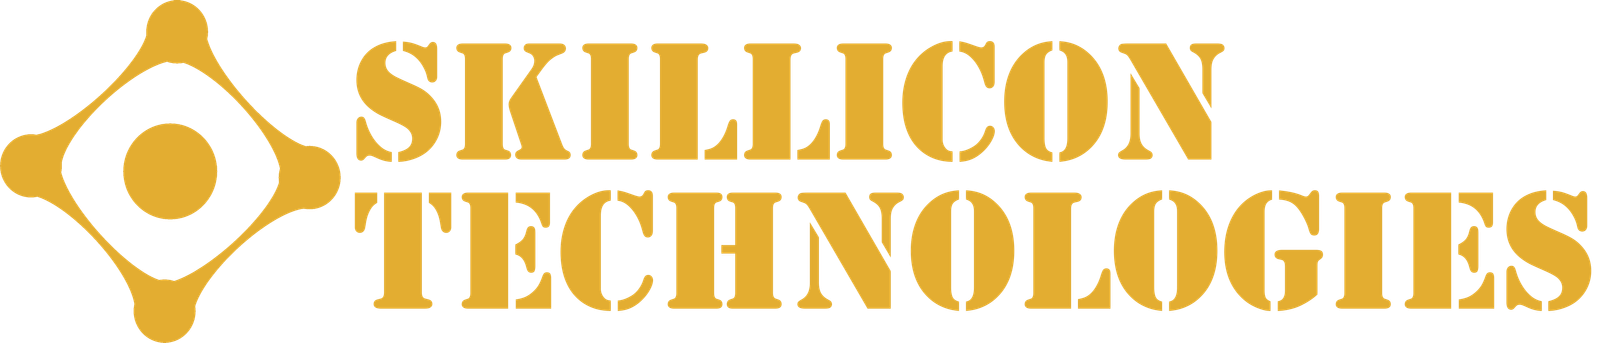 Skillicon Logo